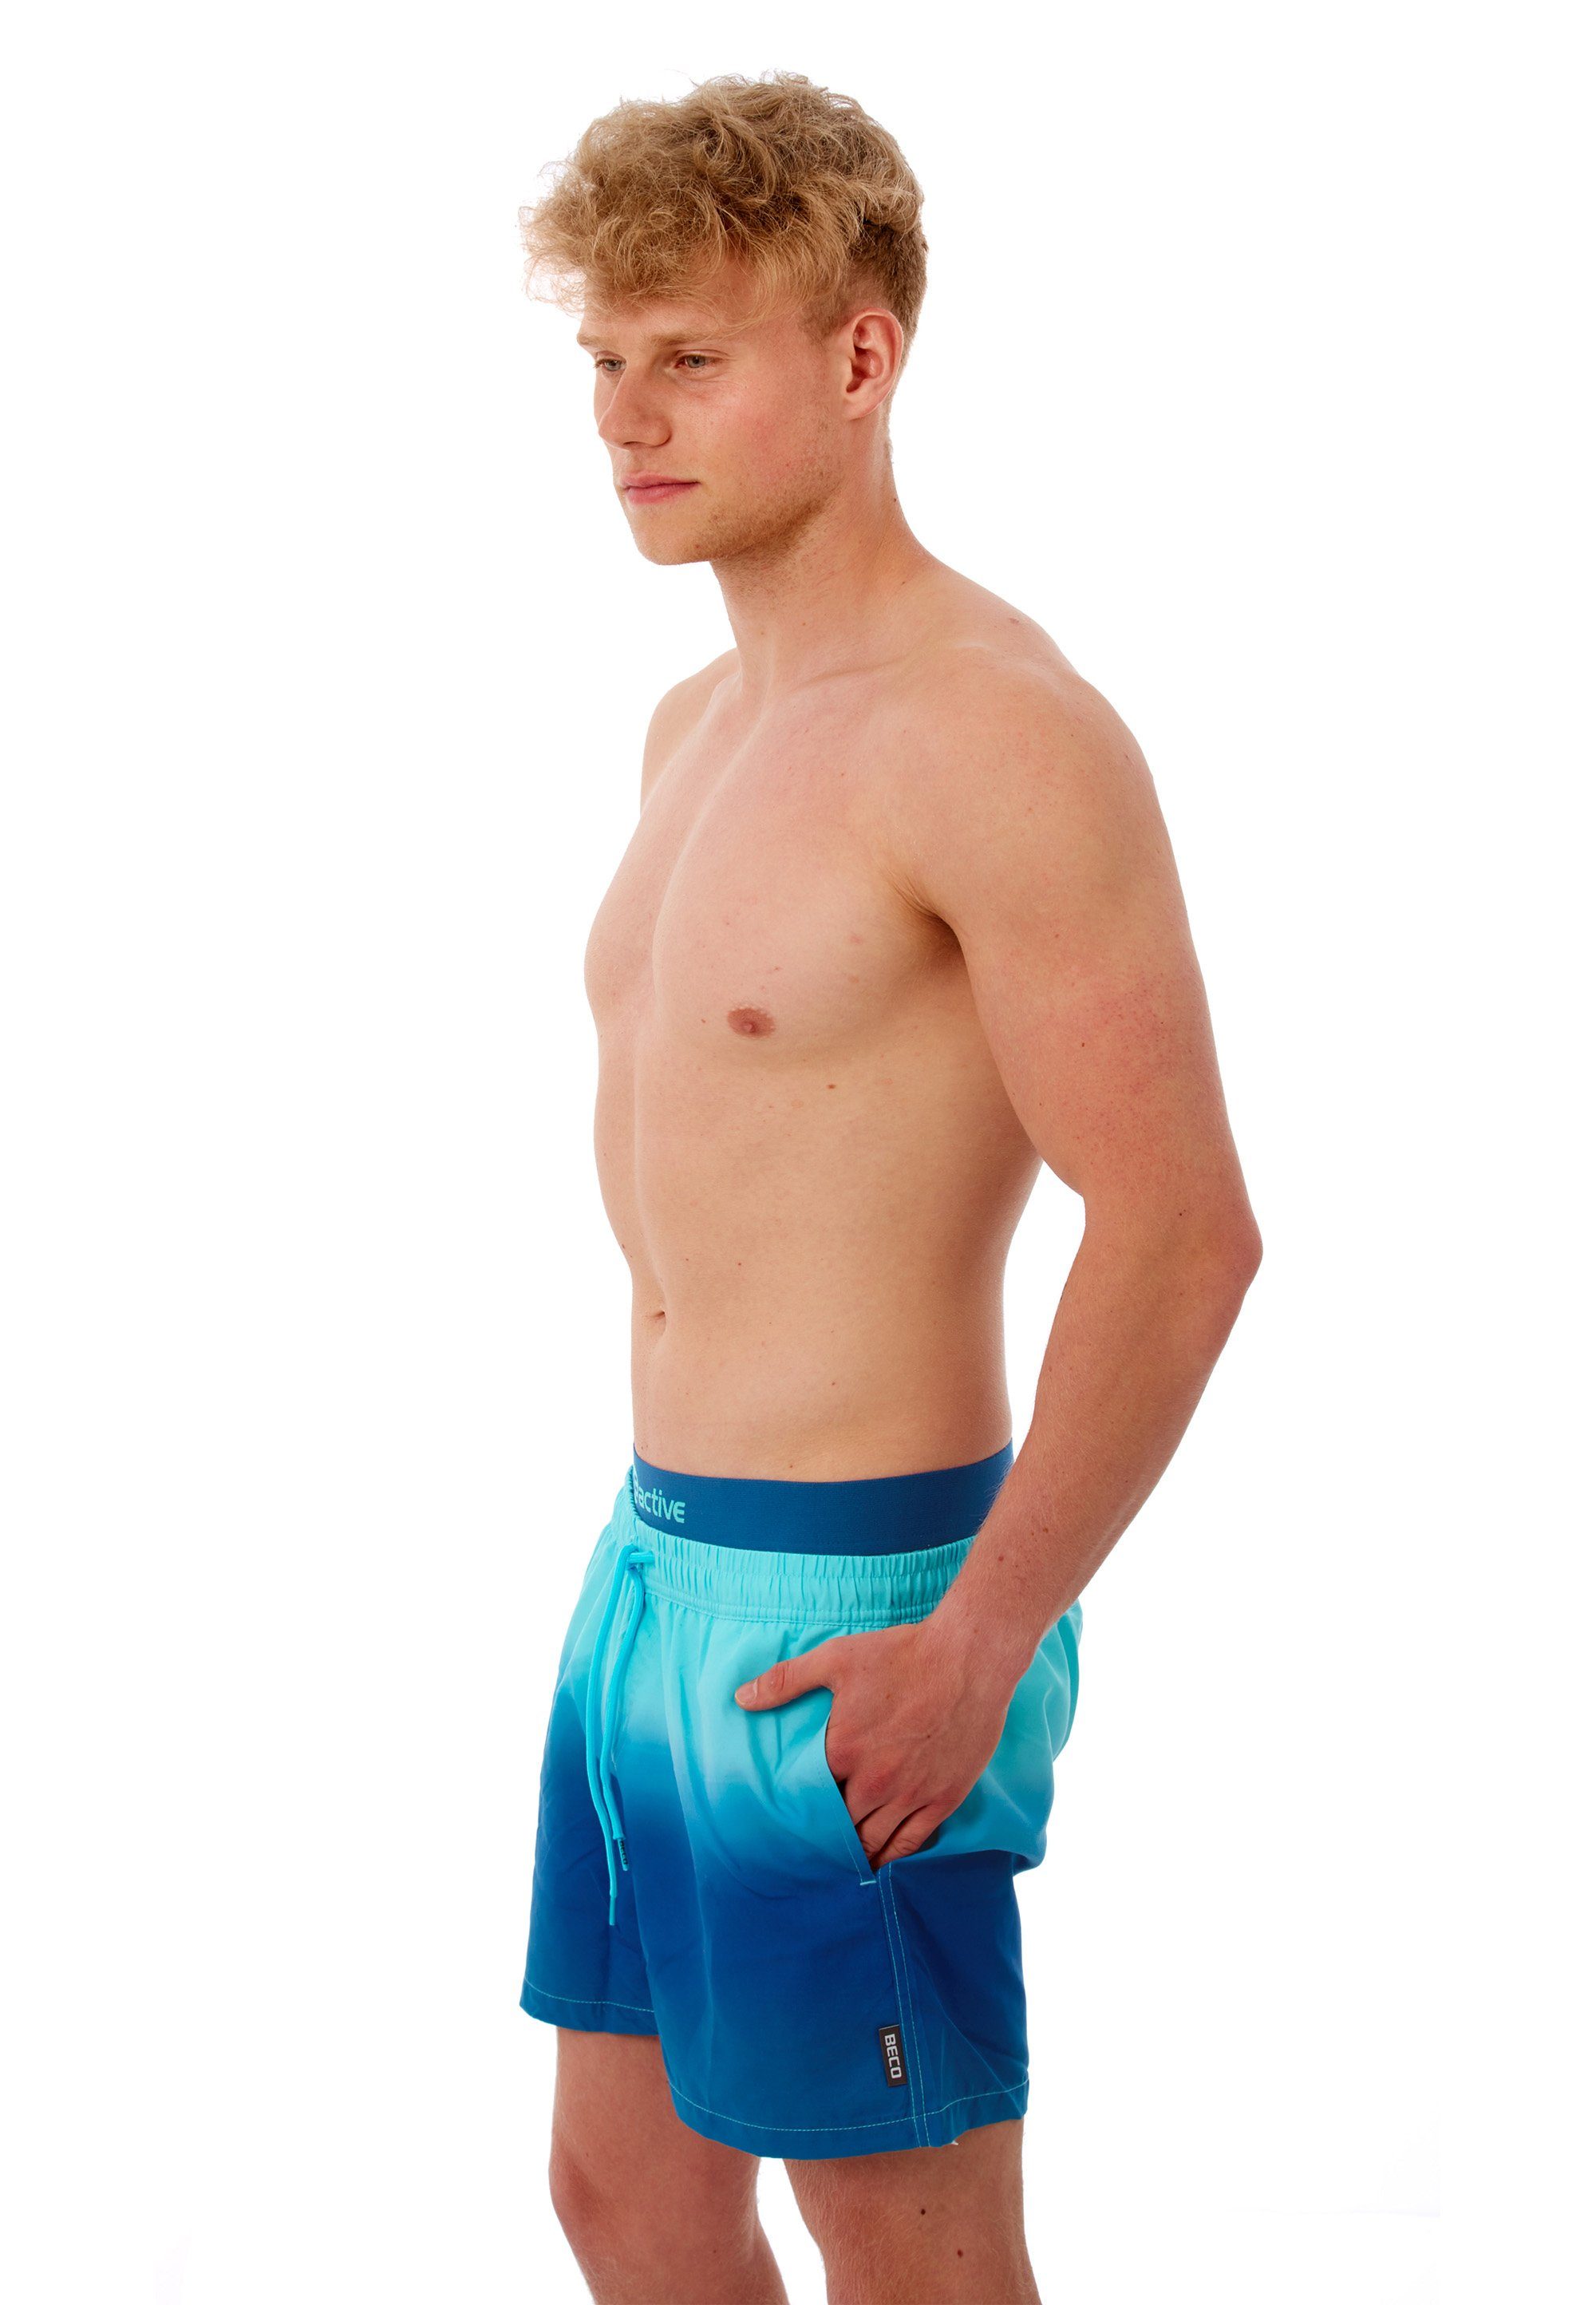 Beco Beermann Badehose Farbverlauf Swim (1-St) hellblau, Shorts BEactive dunkelblau coolem mit